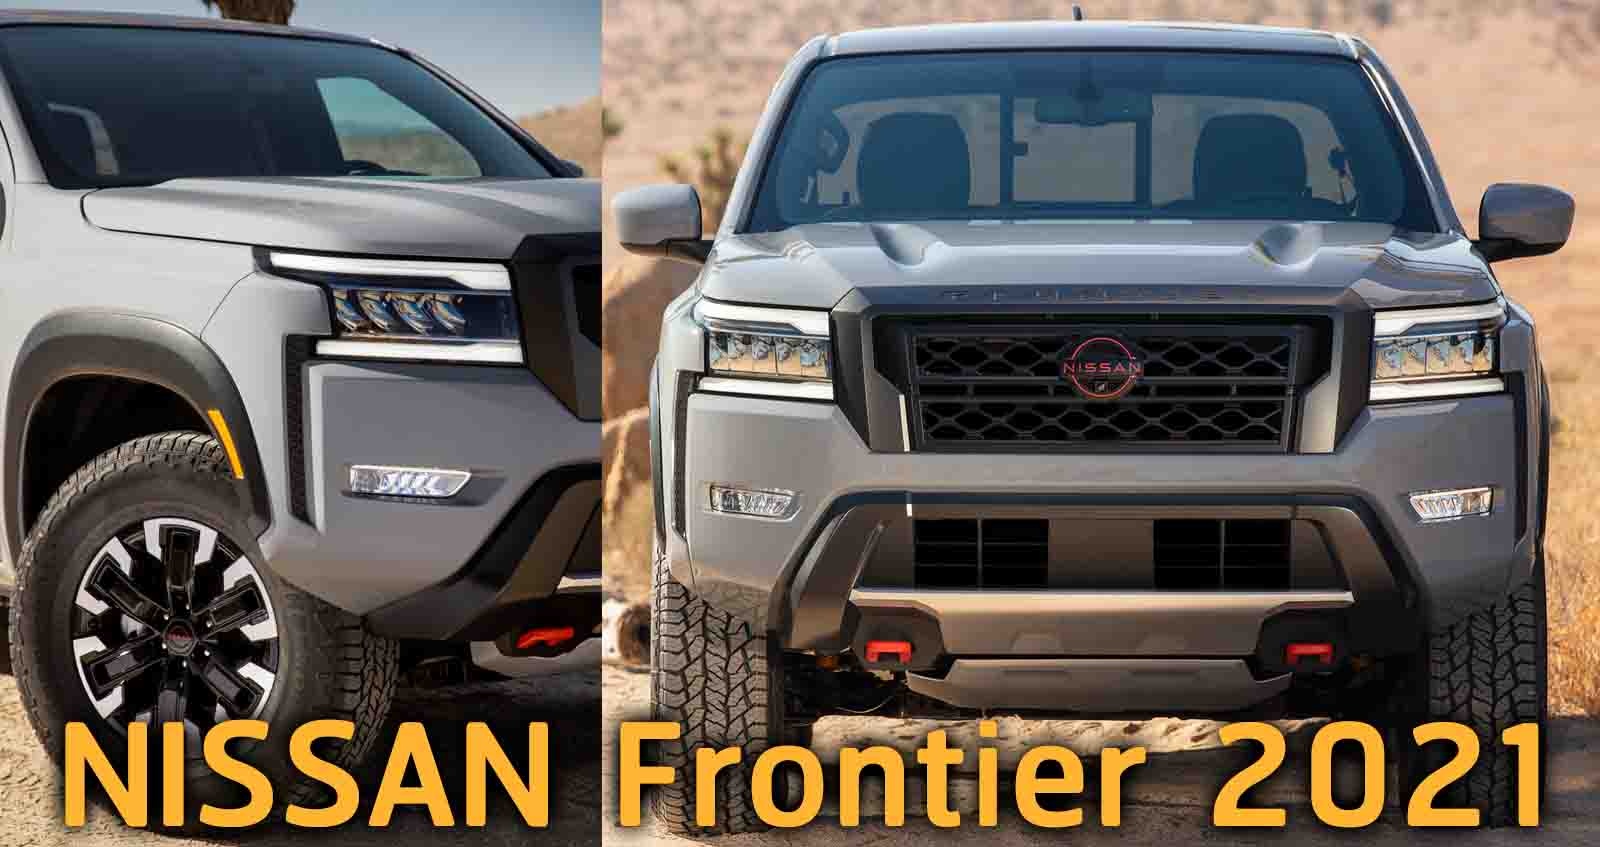 NISSAN Frontier 2021 พร้อมขุมพลัง V6 310 แรงม้า